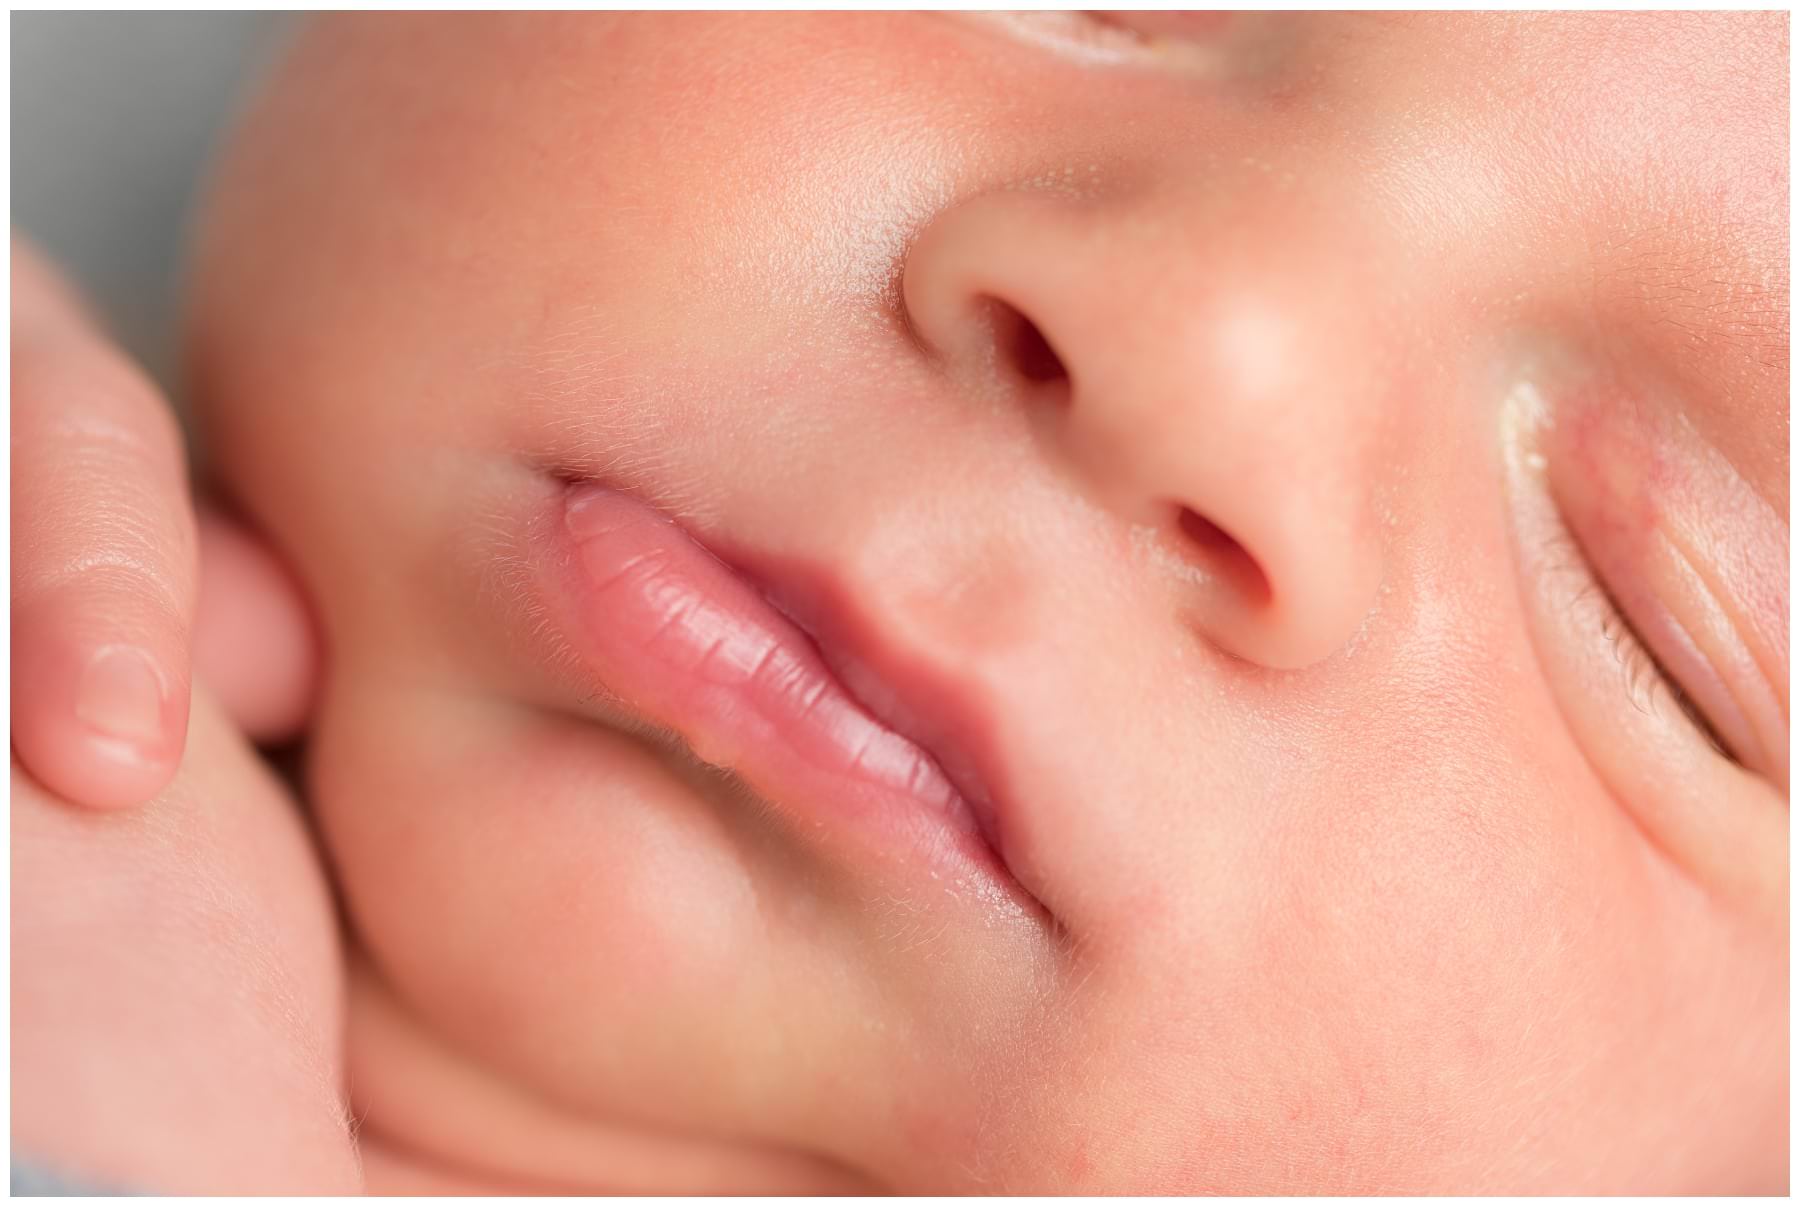 Newborn close-up portrait